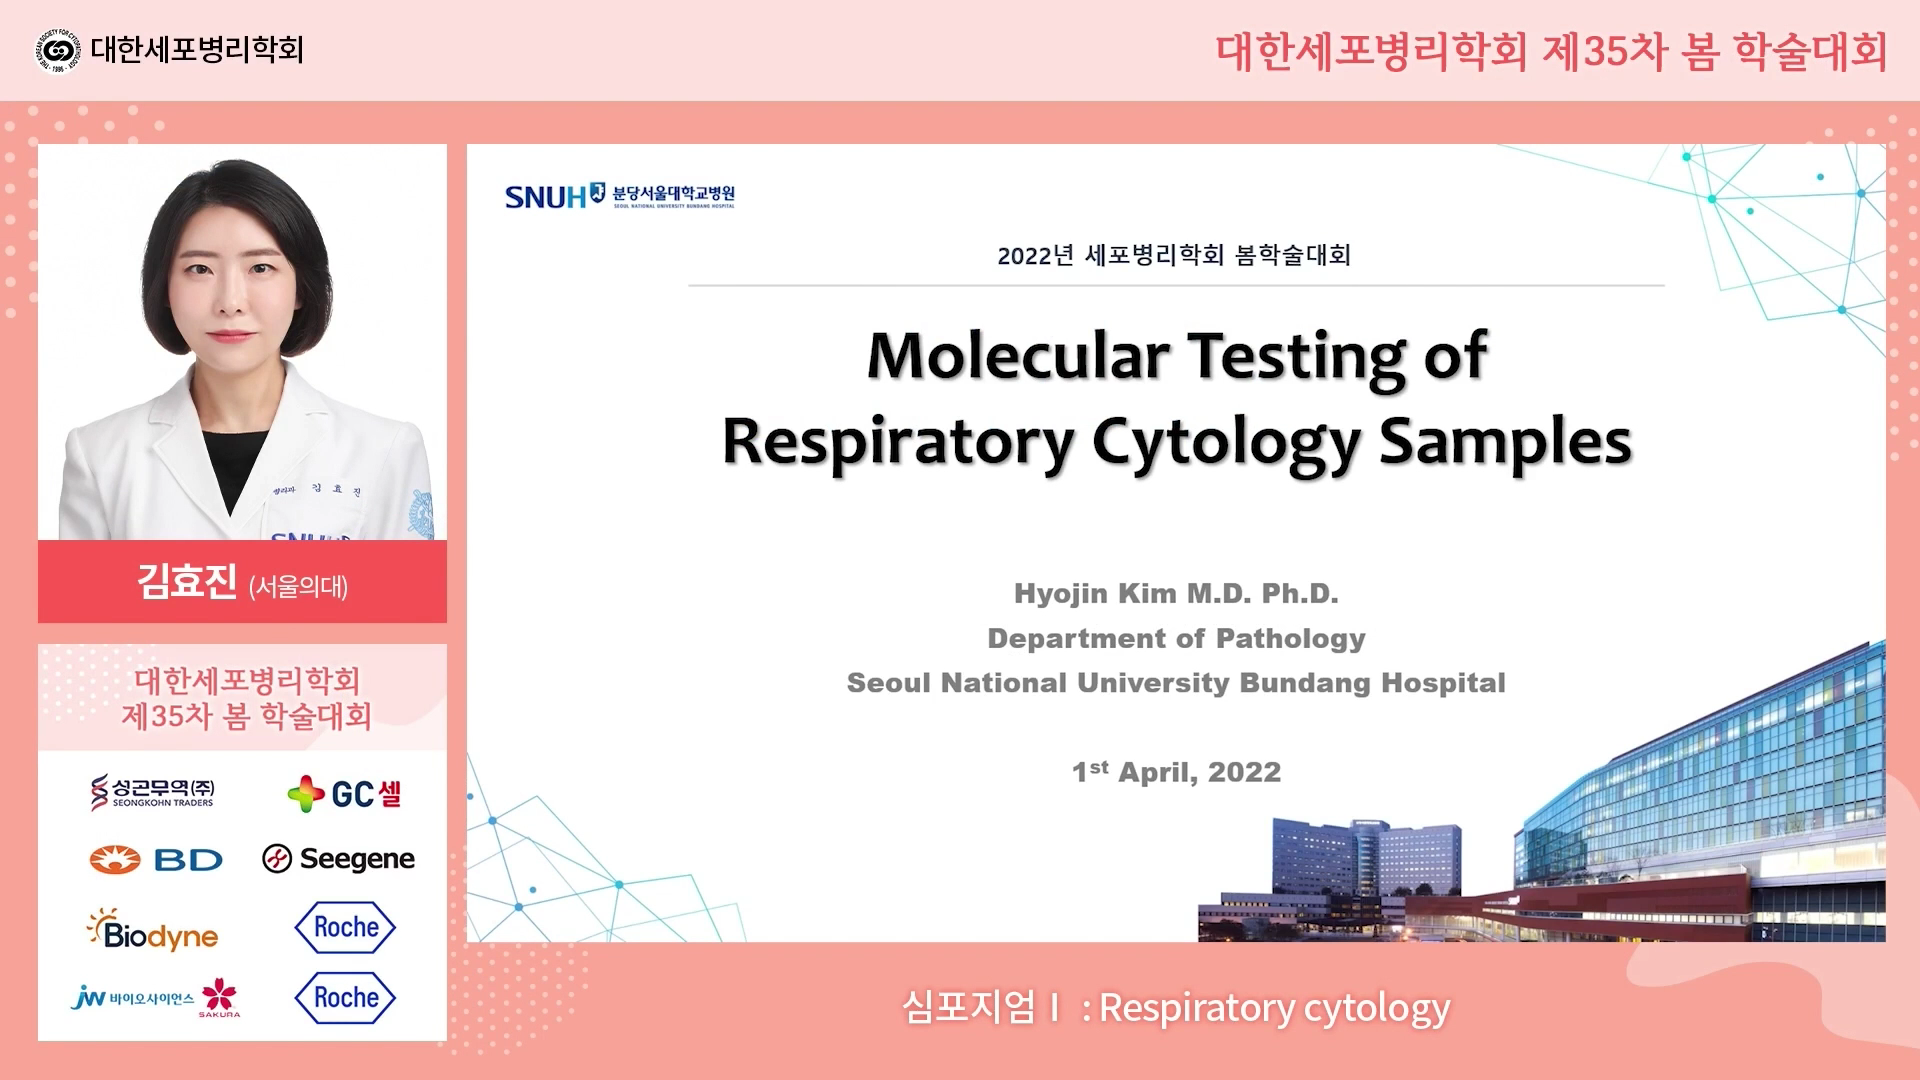 Molecular testing of respiratory cytology samples